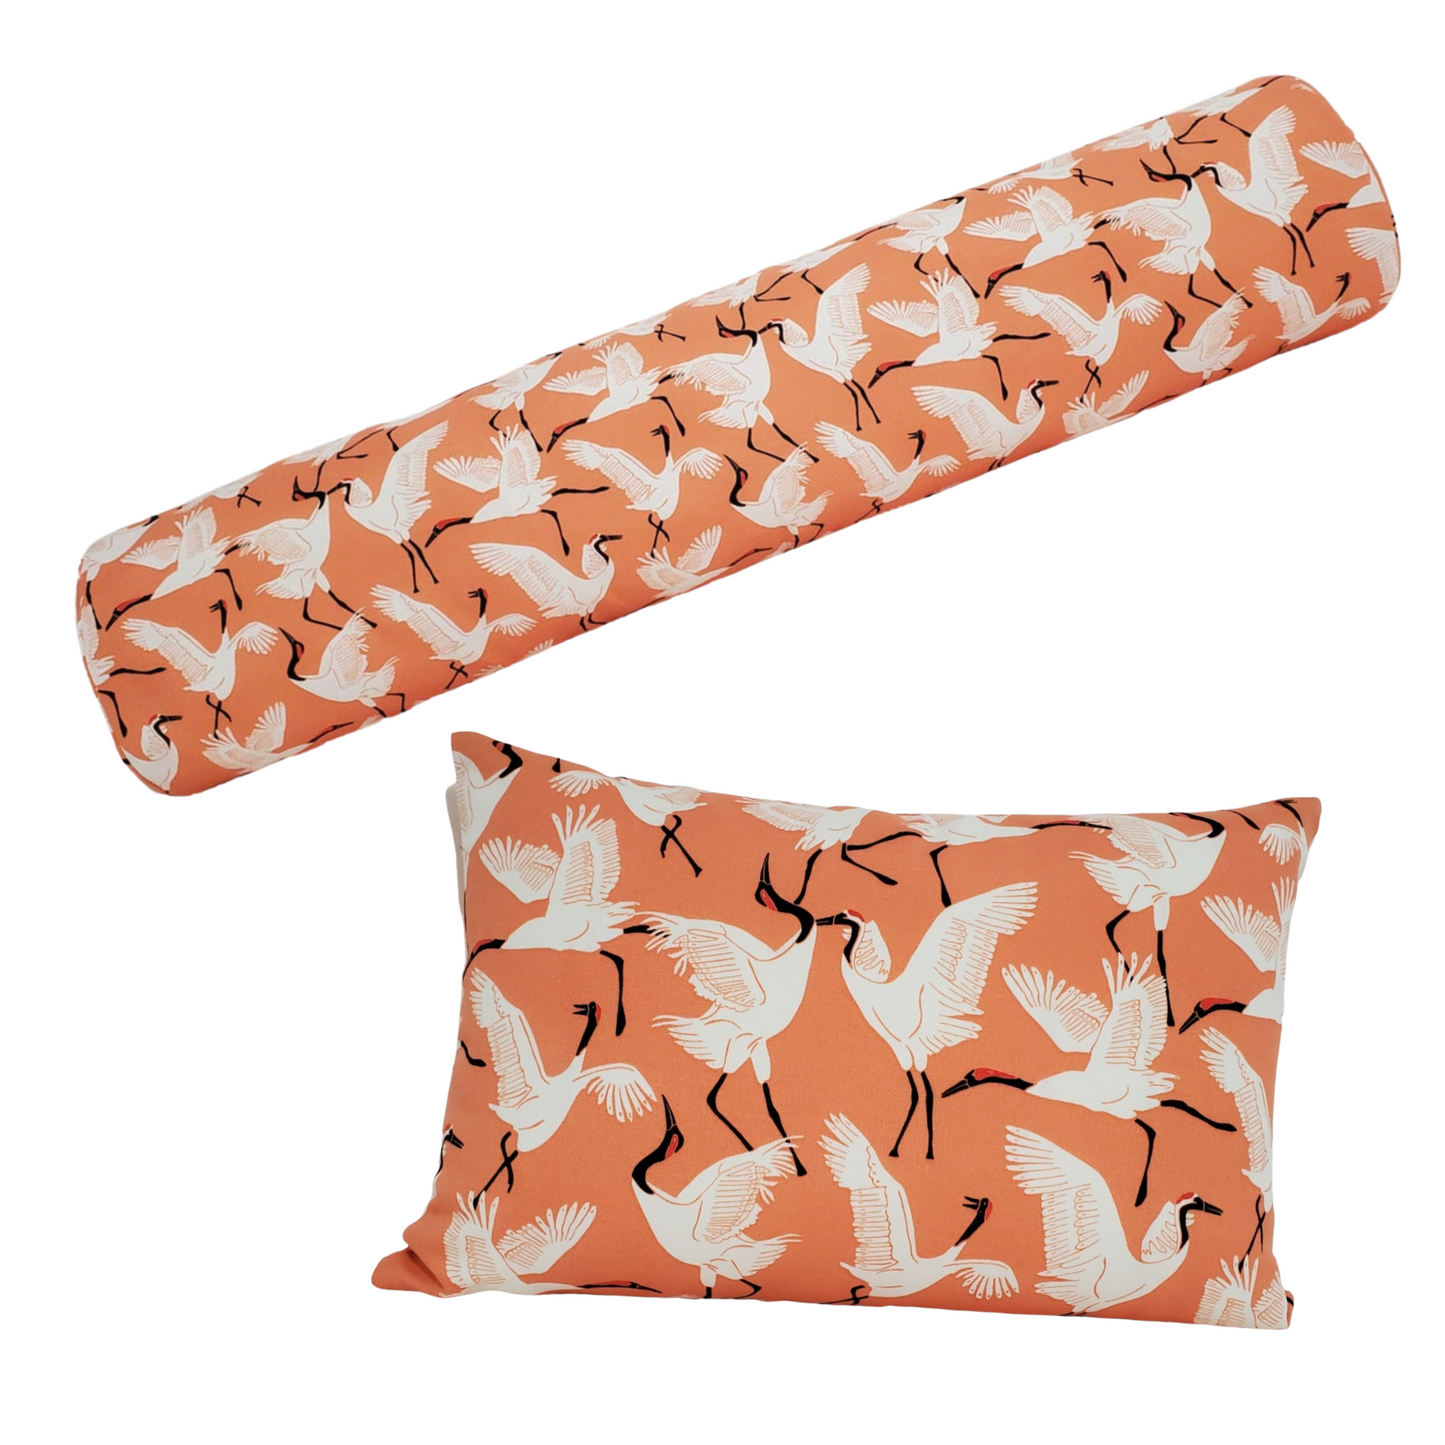 Novogratz Block Cranes Pillow Cover in Ebony - OEKO TEX Sustainable / Available in Throw, Lumbar, Bolster Pillow Covers